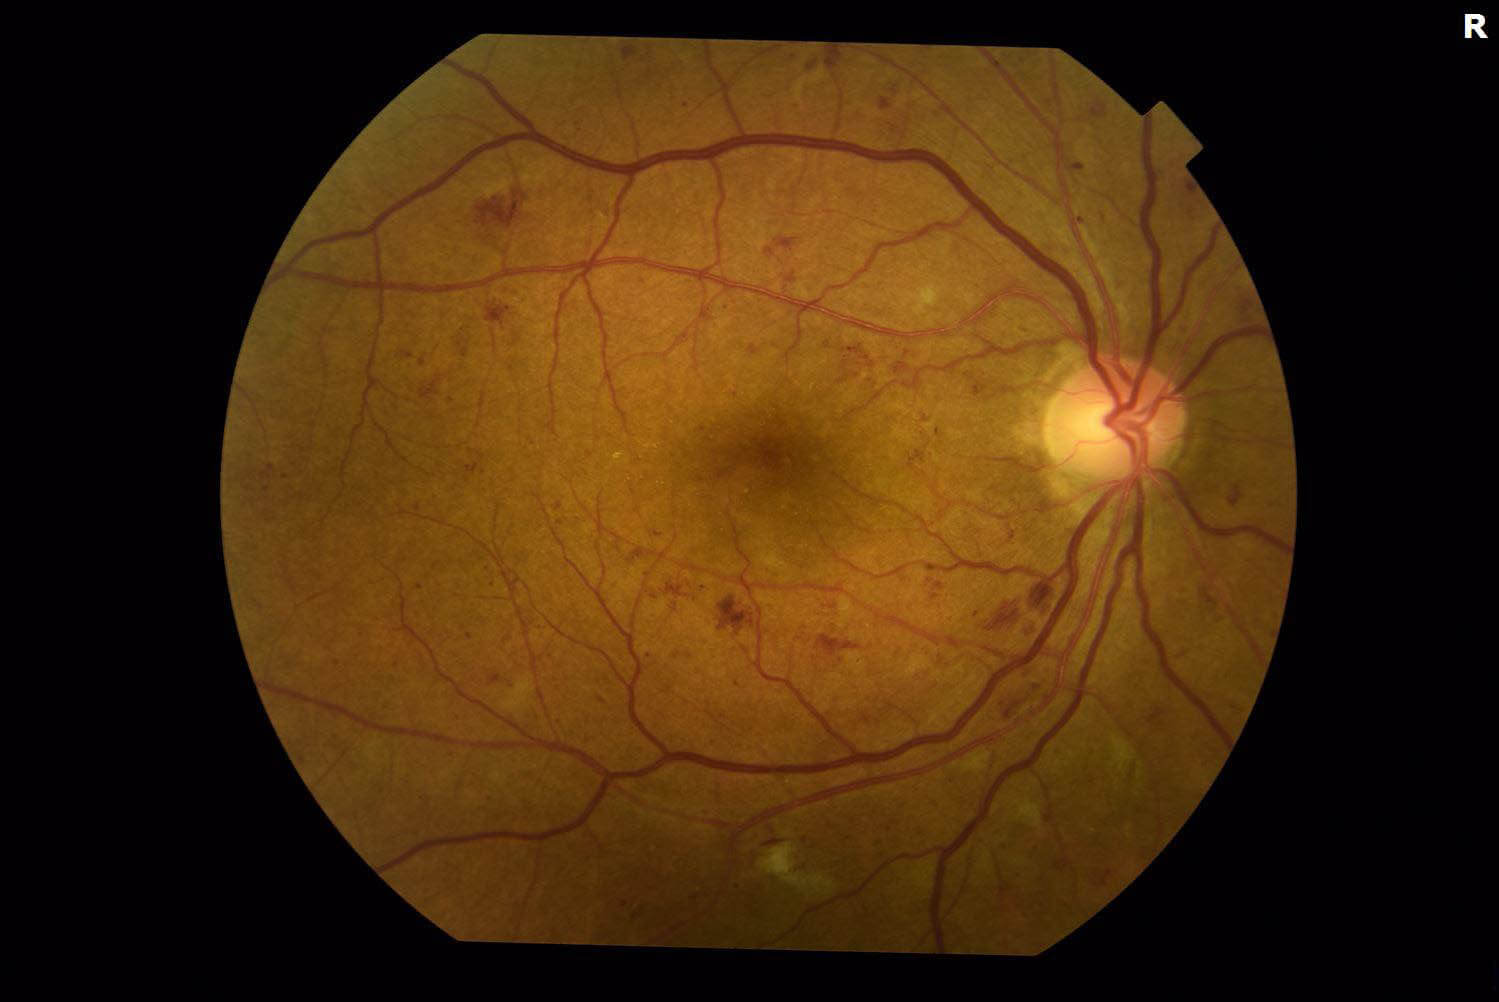 Non-proliferative diabetic retinopathy with macular edema